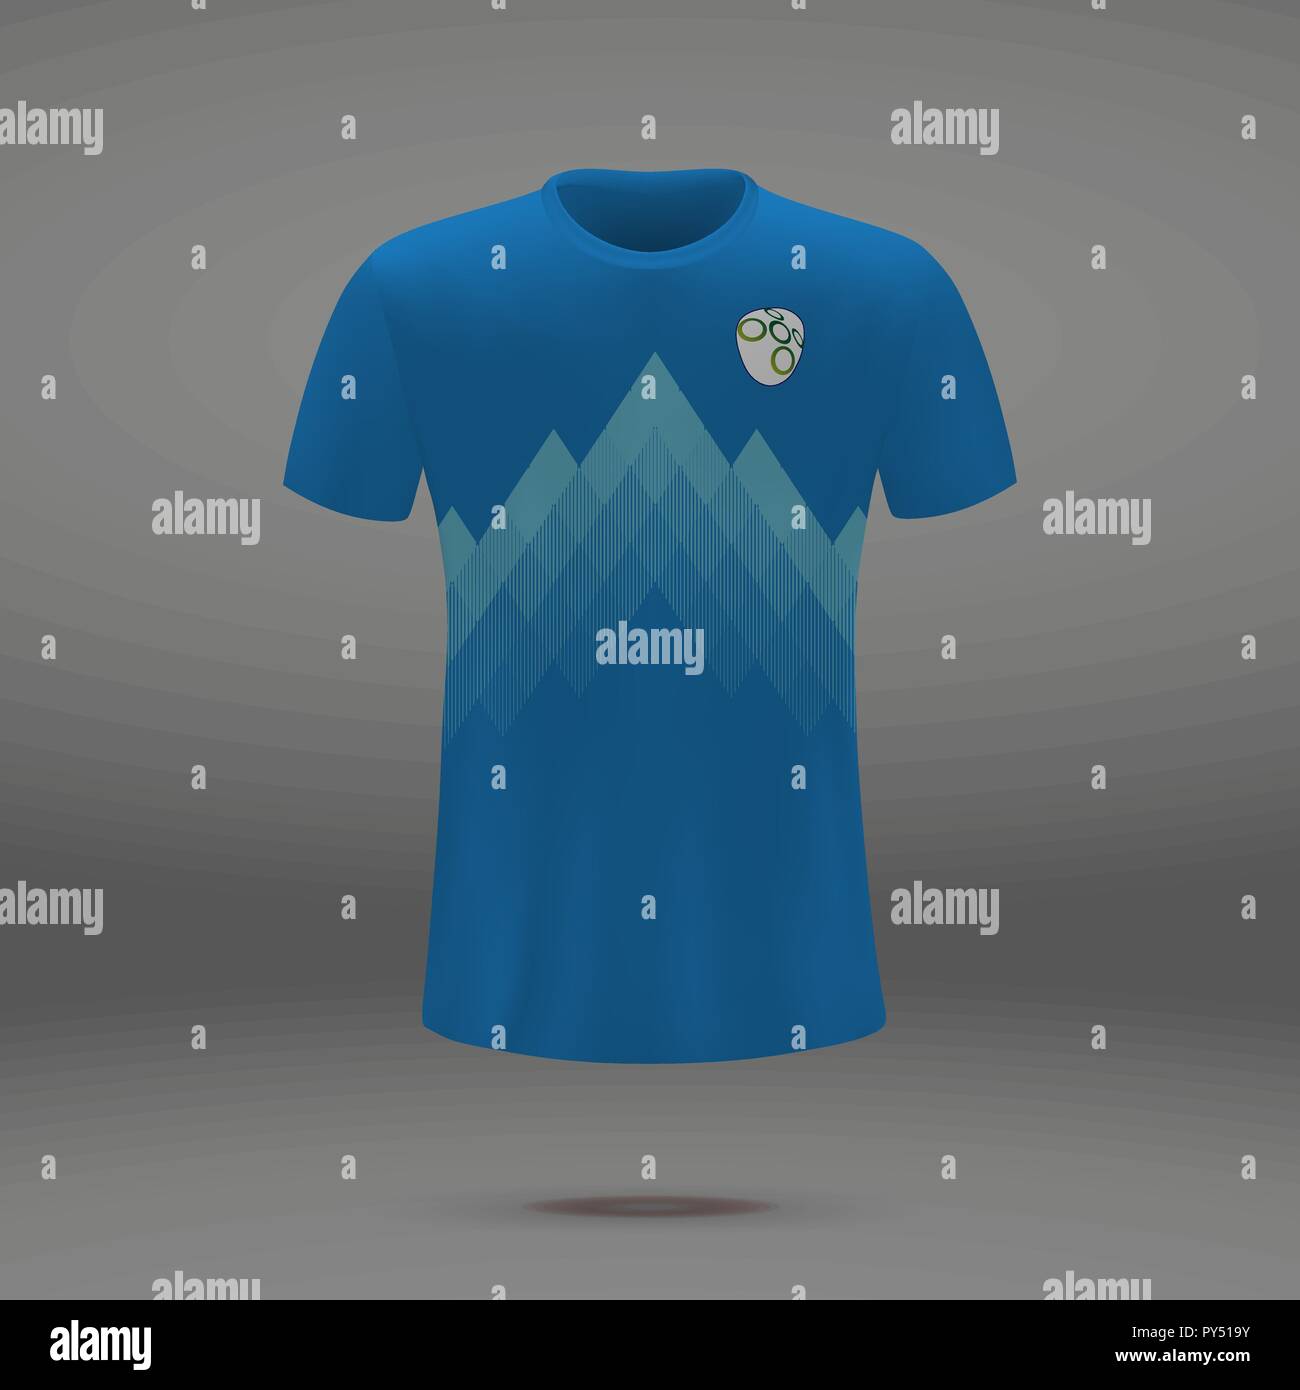 football kit of Slovenia 2018, t-shirt template for soccer jersey